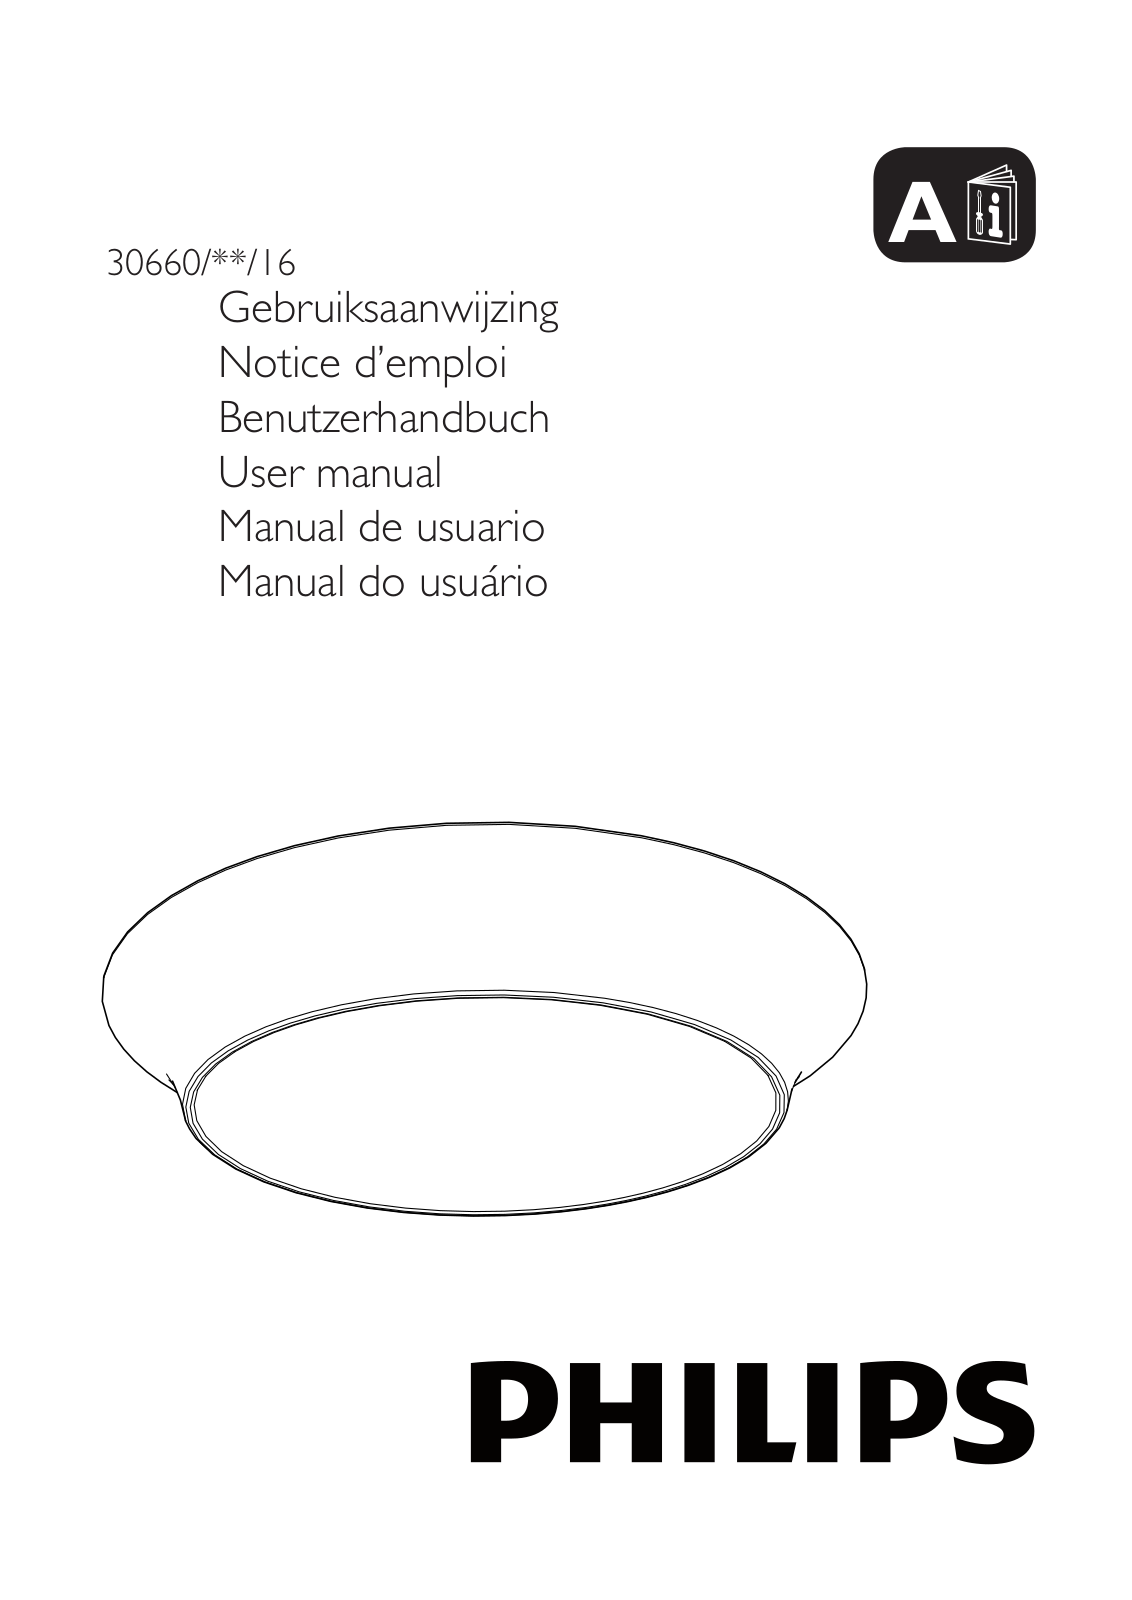 Philips 30660-31-16 User Manual